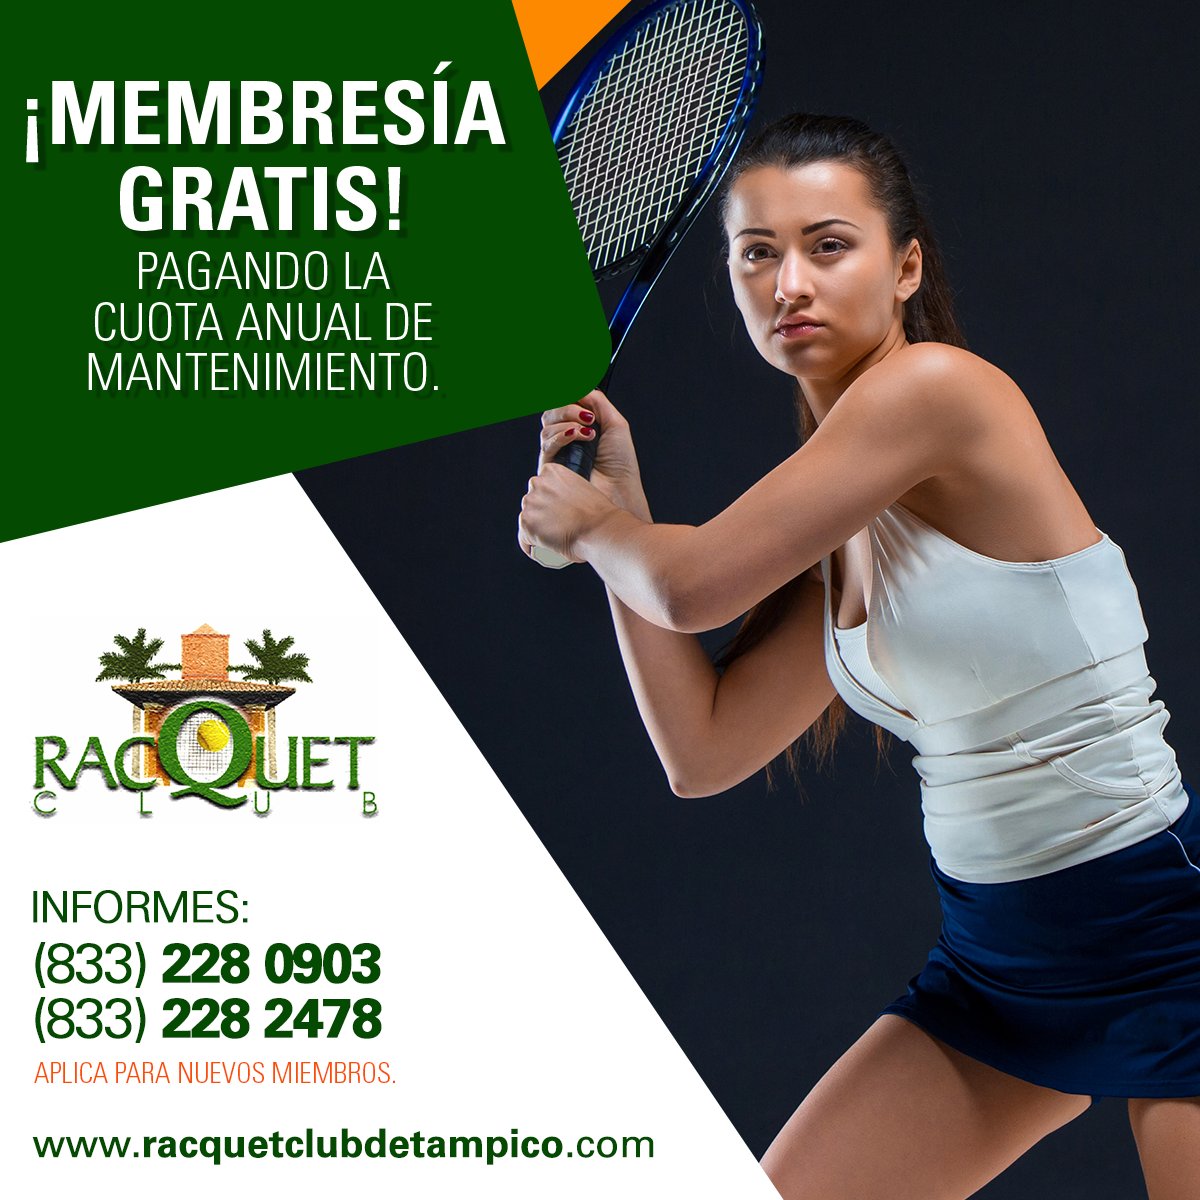 Racquet Club Tampico в Twitter: „Aprovecha esta gran oportunidad y obtén tu  membresía de una manera sencilla. #RacquetClub #MembresíaGratis  /LktnomqRBz“ / Twitter